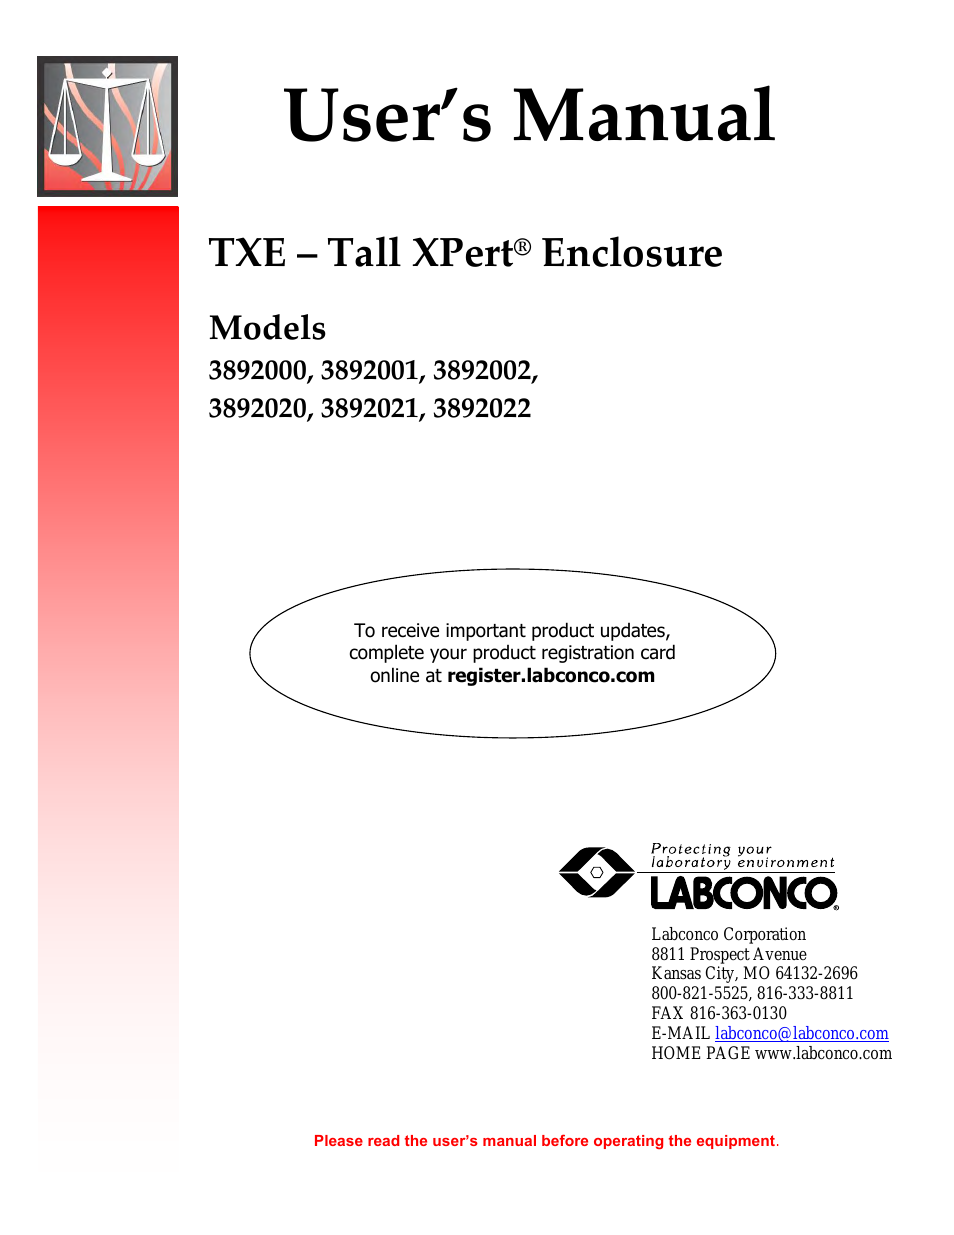 TXE Tall XPerEnclosure 3892022